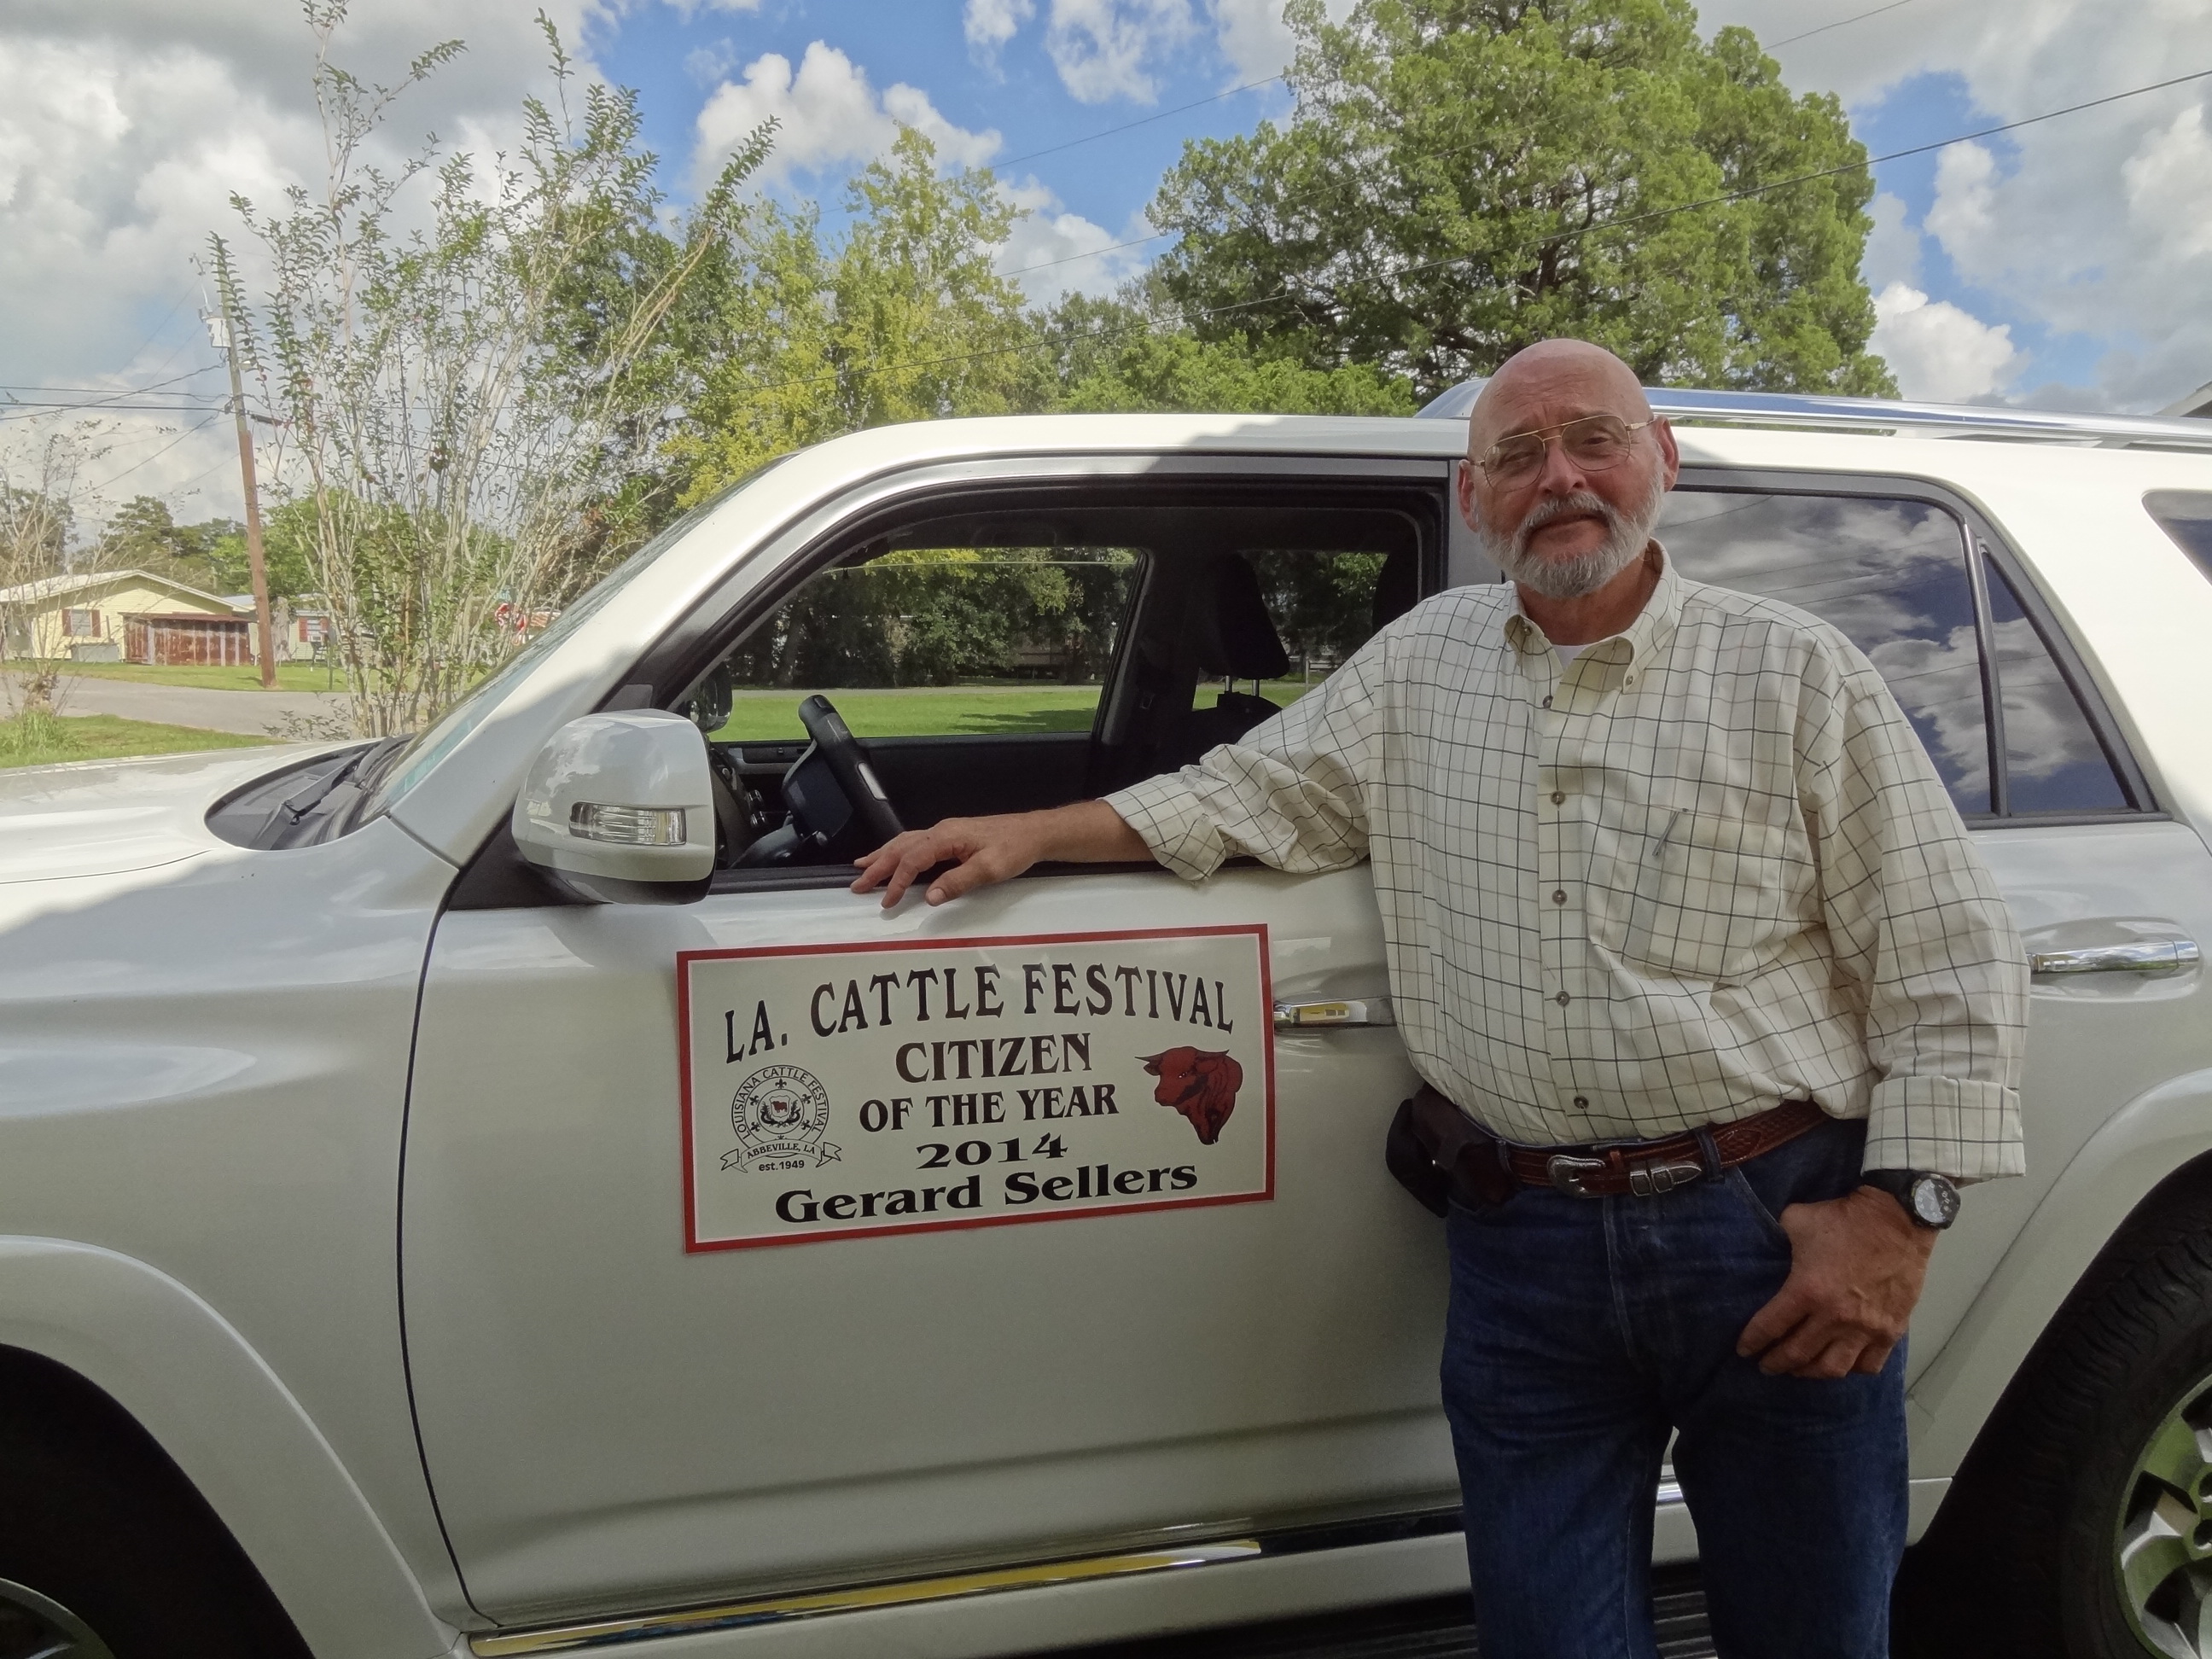 La Cattle Festival Citizen of the year 2014.